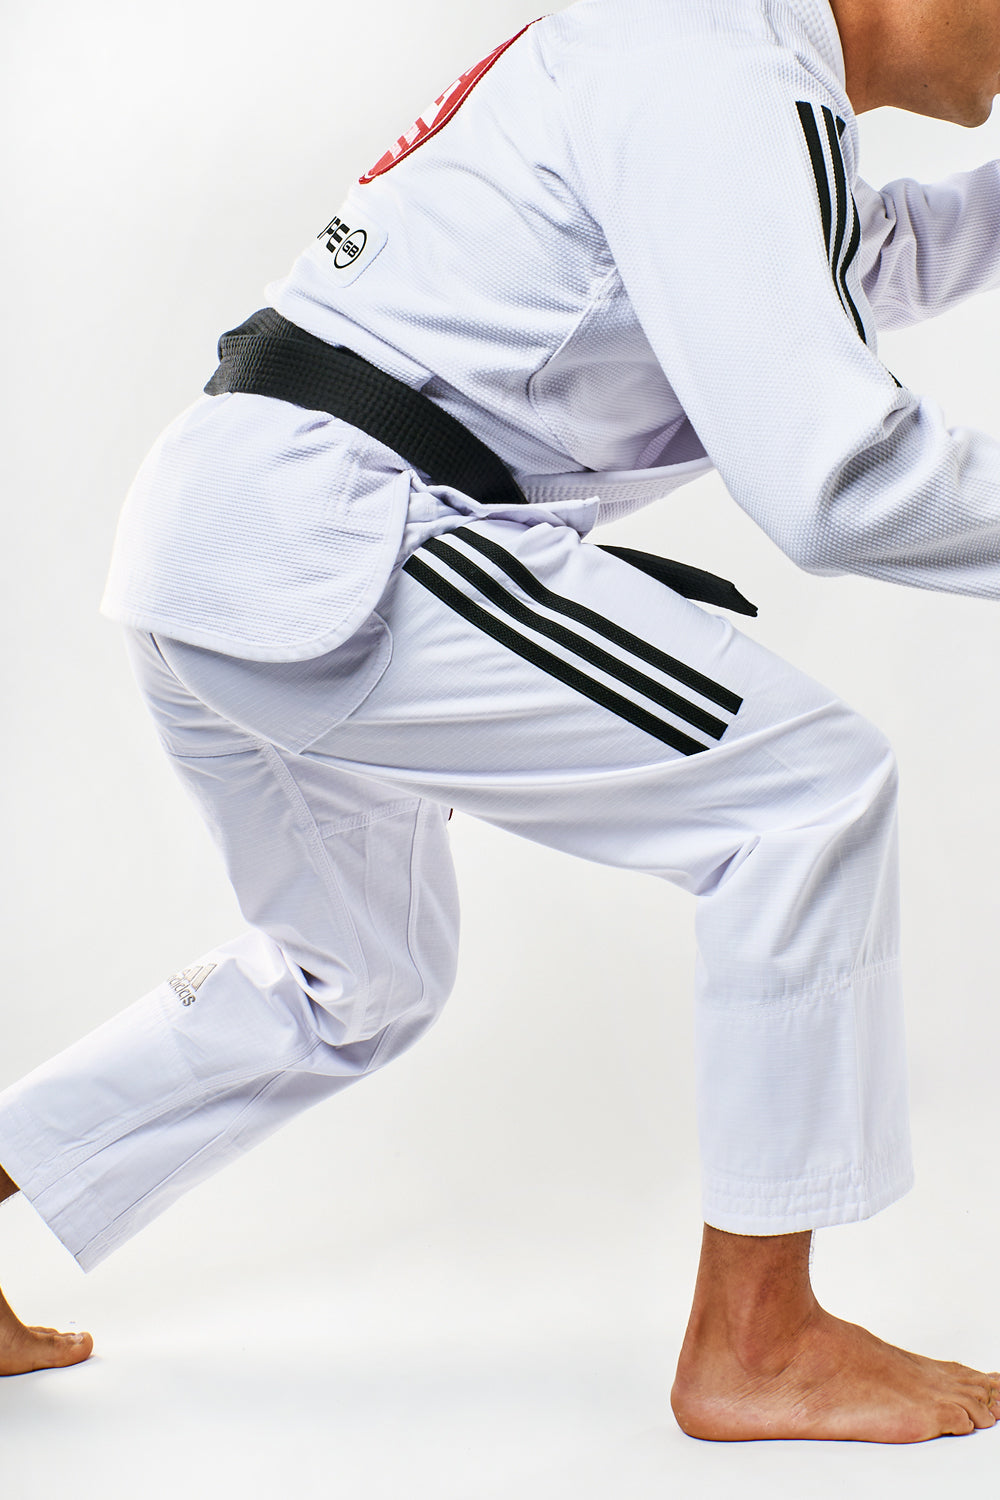 Peregrino Egipto Dar derechos GB Competition Kimono V2 by Adidas - White – GB Wear